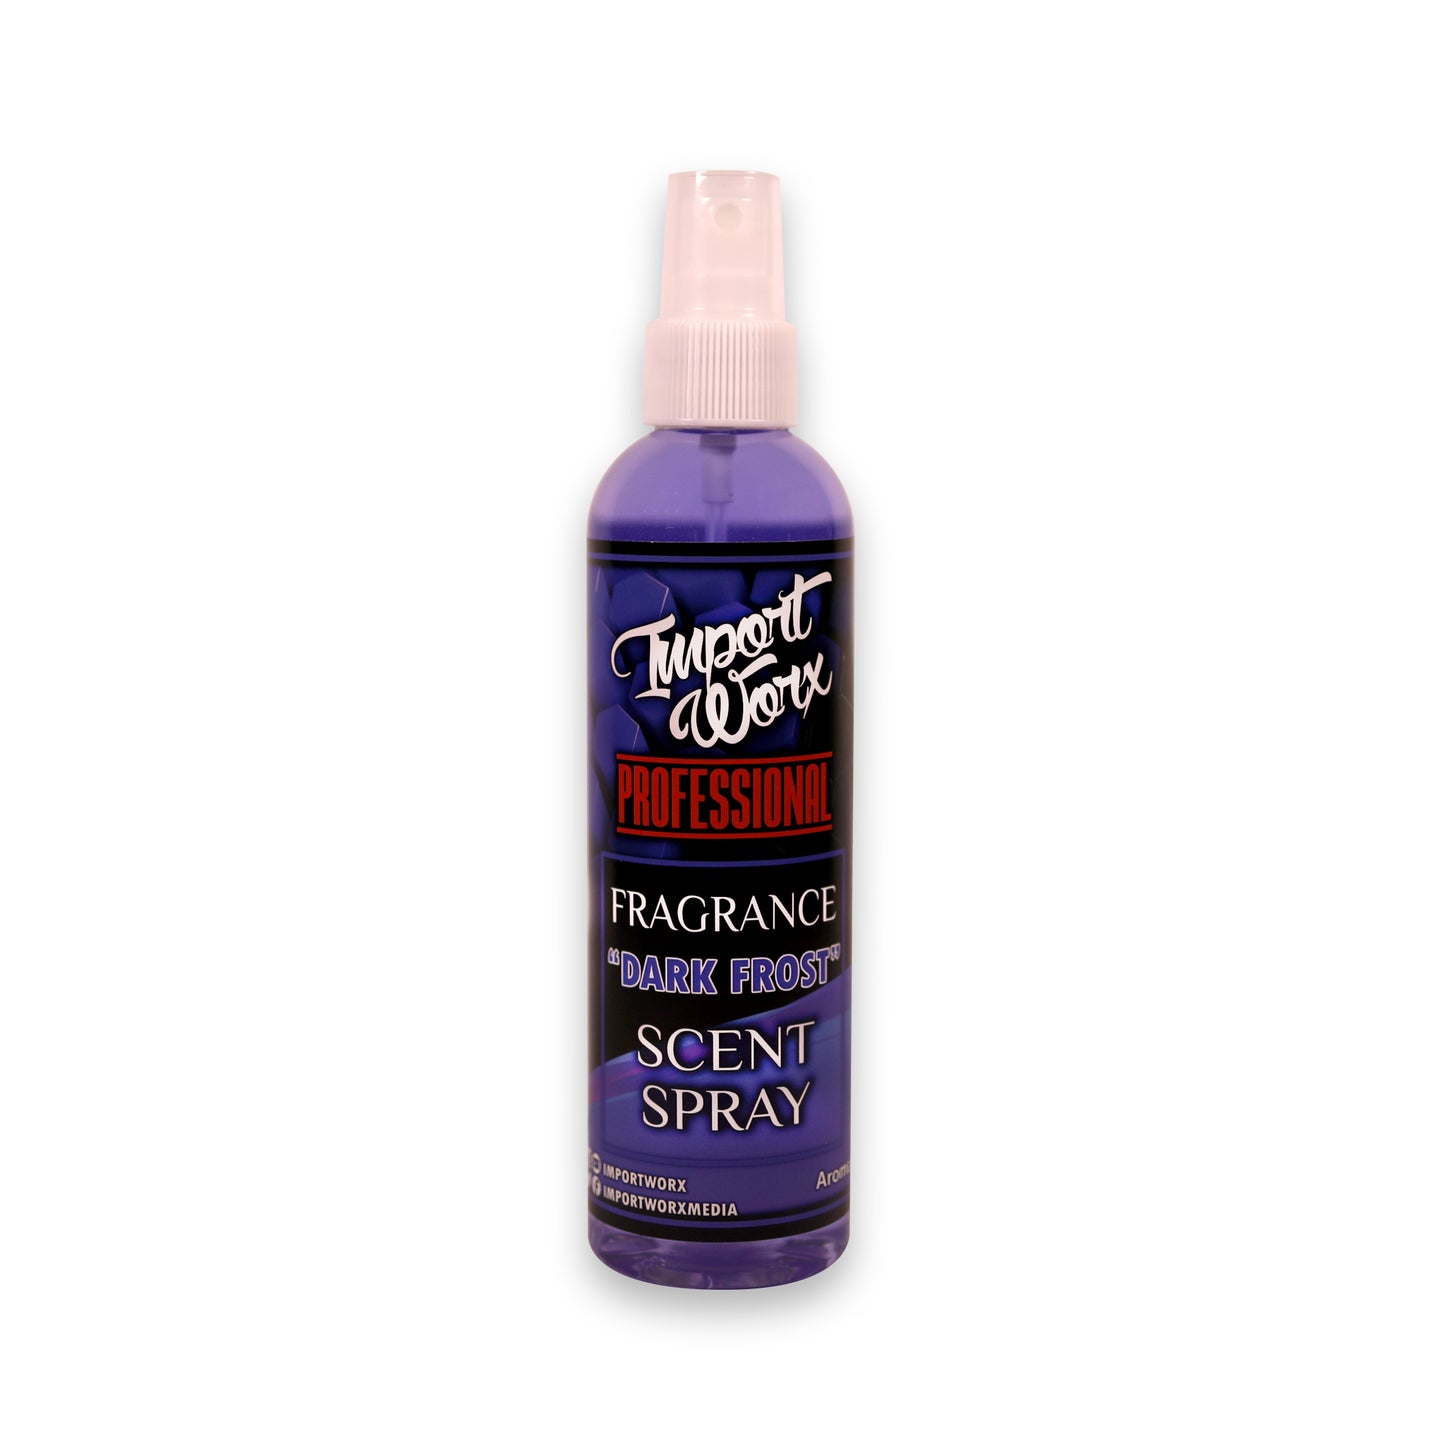 ImportWorx Dark Frost Fragrance Scent Spray